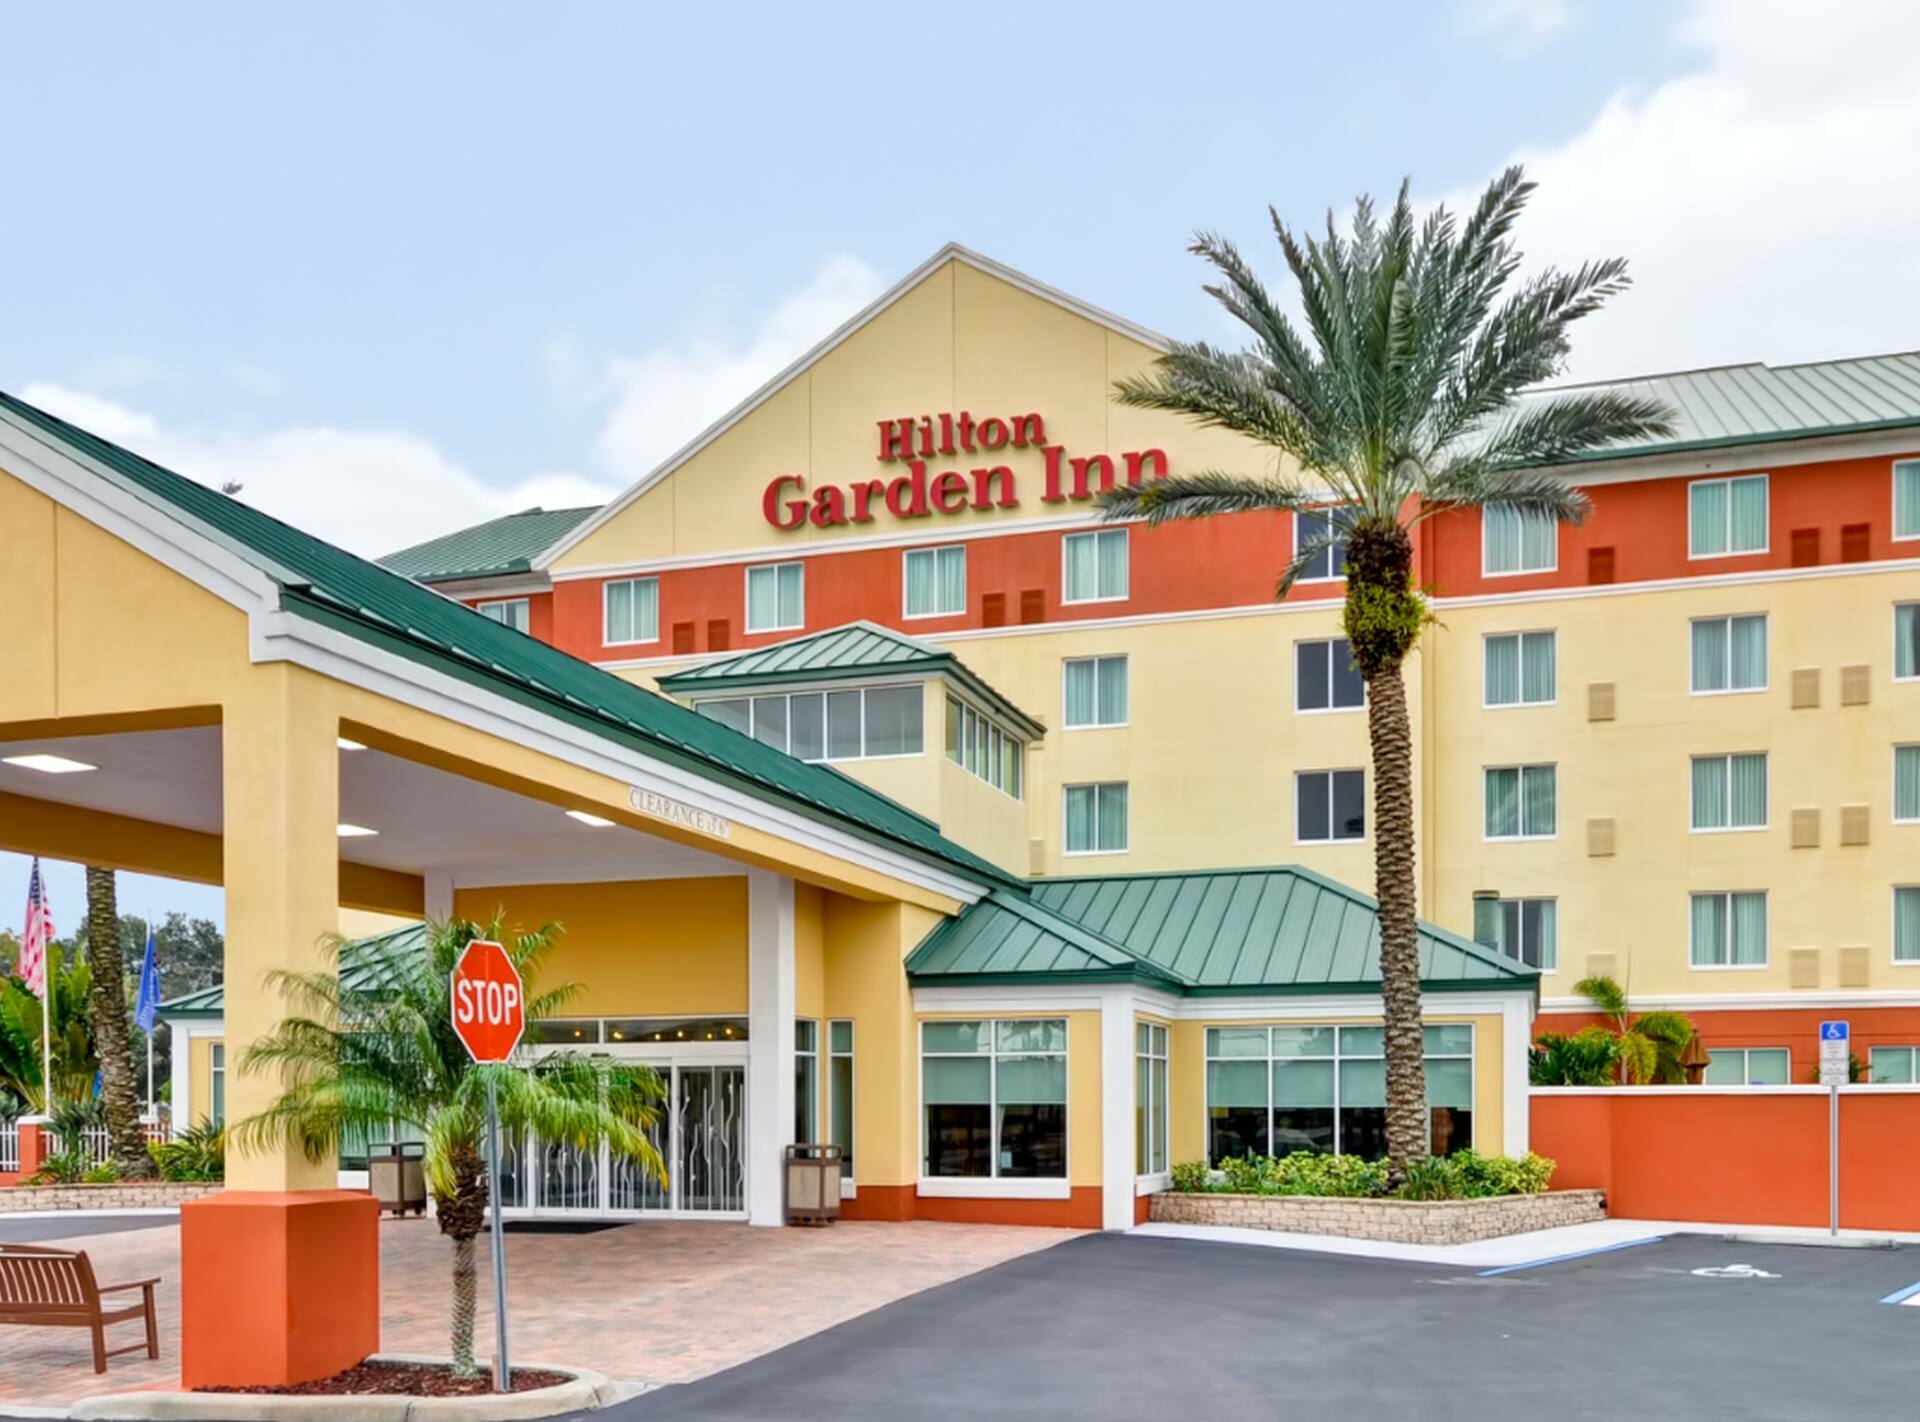 Photo of Hilton Garden Inn Tampa Northwest/Oldsmar, Oldsmar, FL